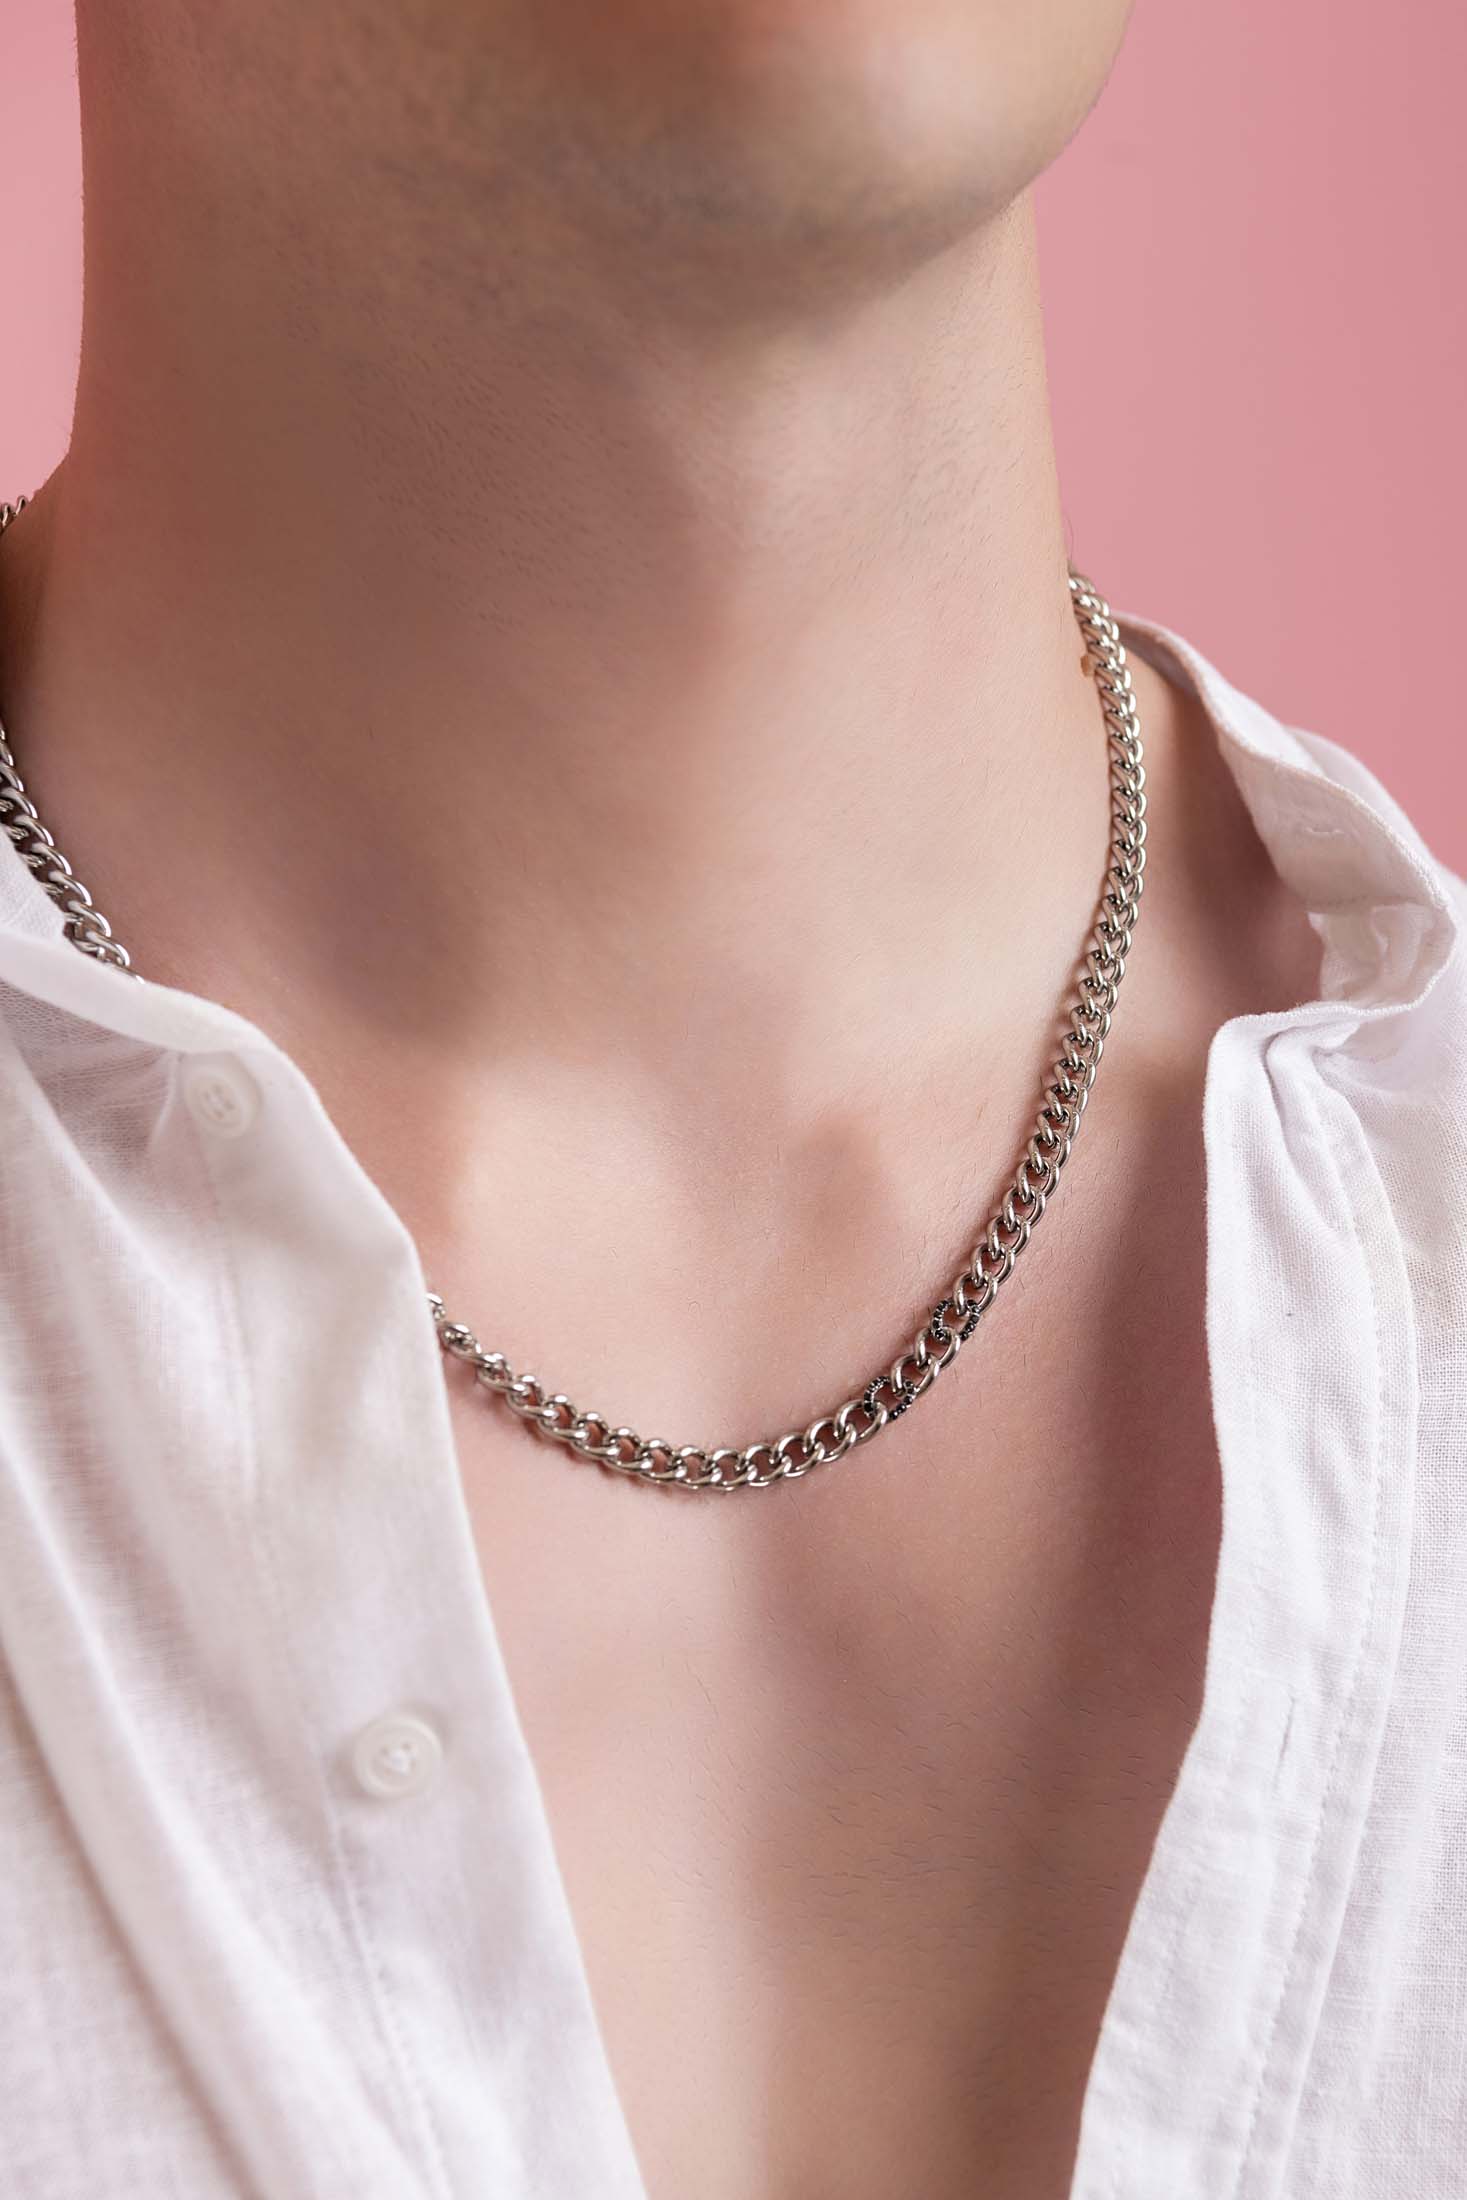 Black Zirconia Curb Chain Necklace